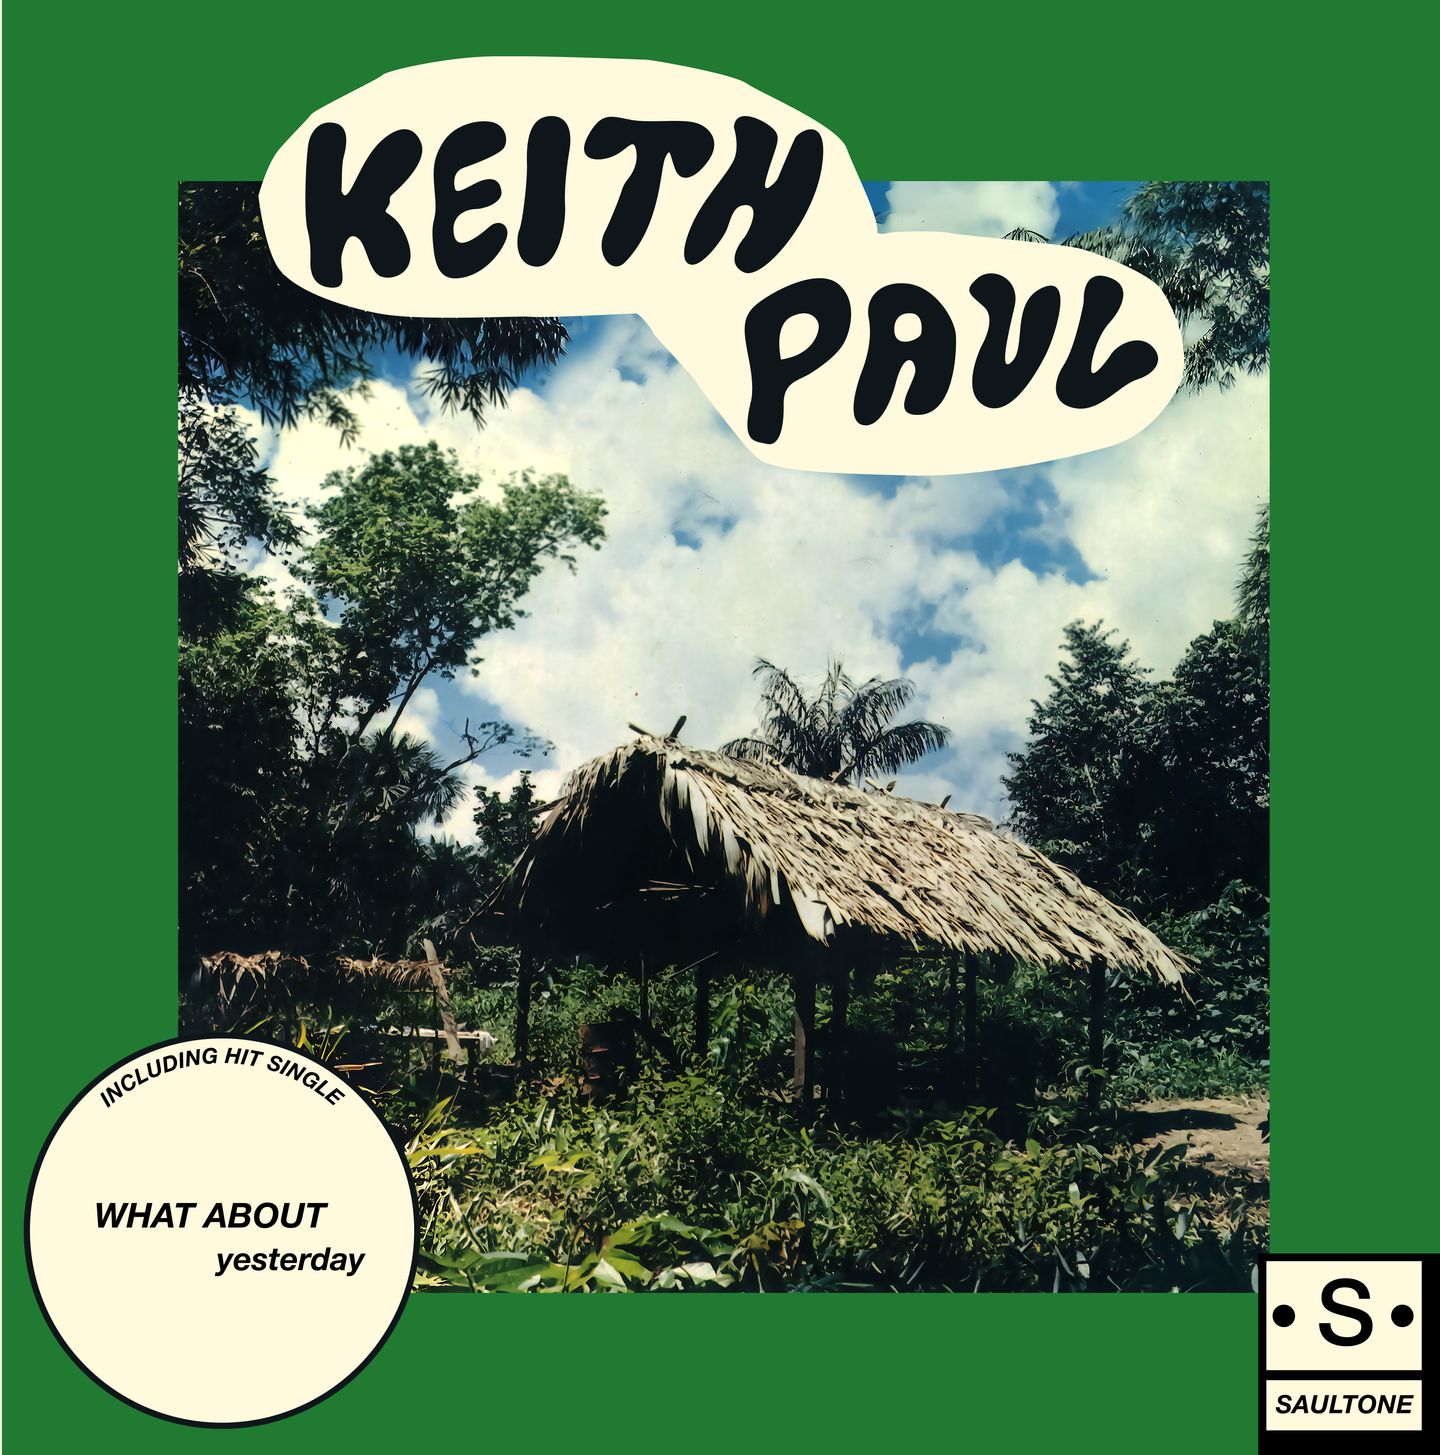 KEITH PAUL VINYLE LP